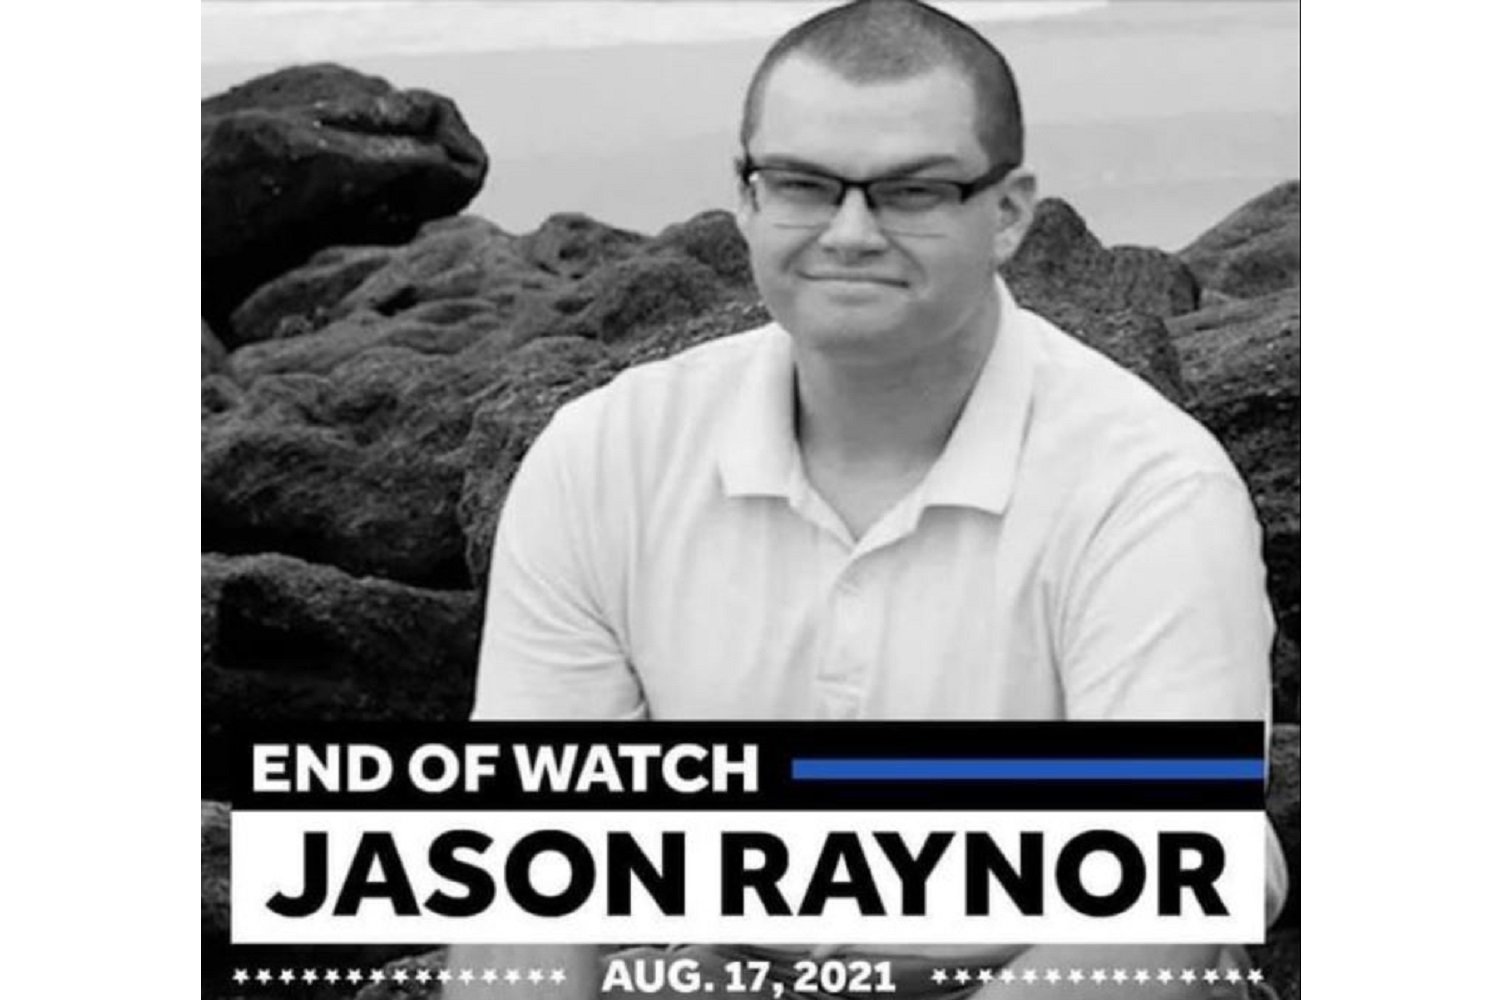 Jason Raynor